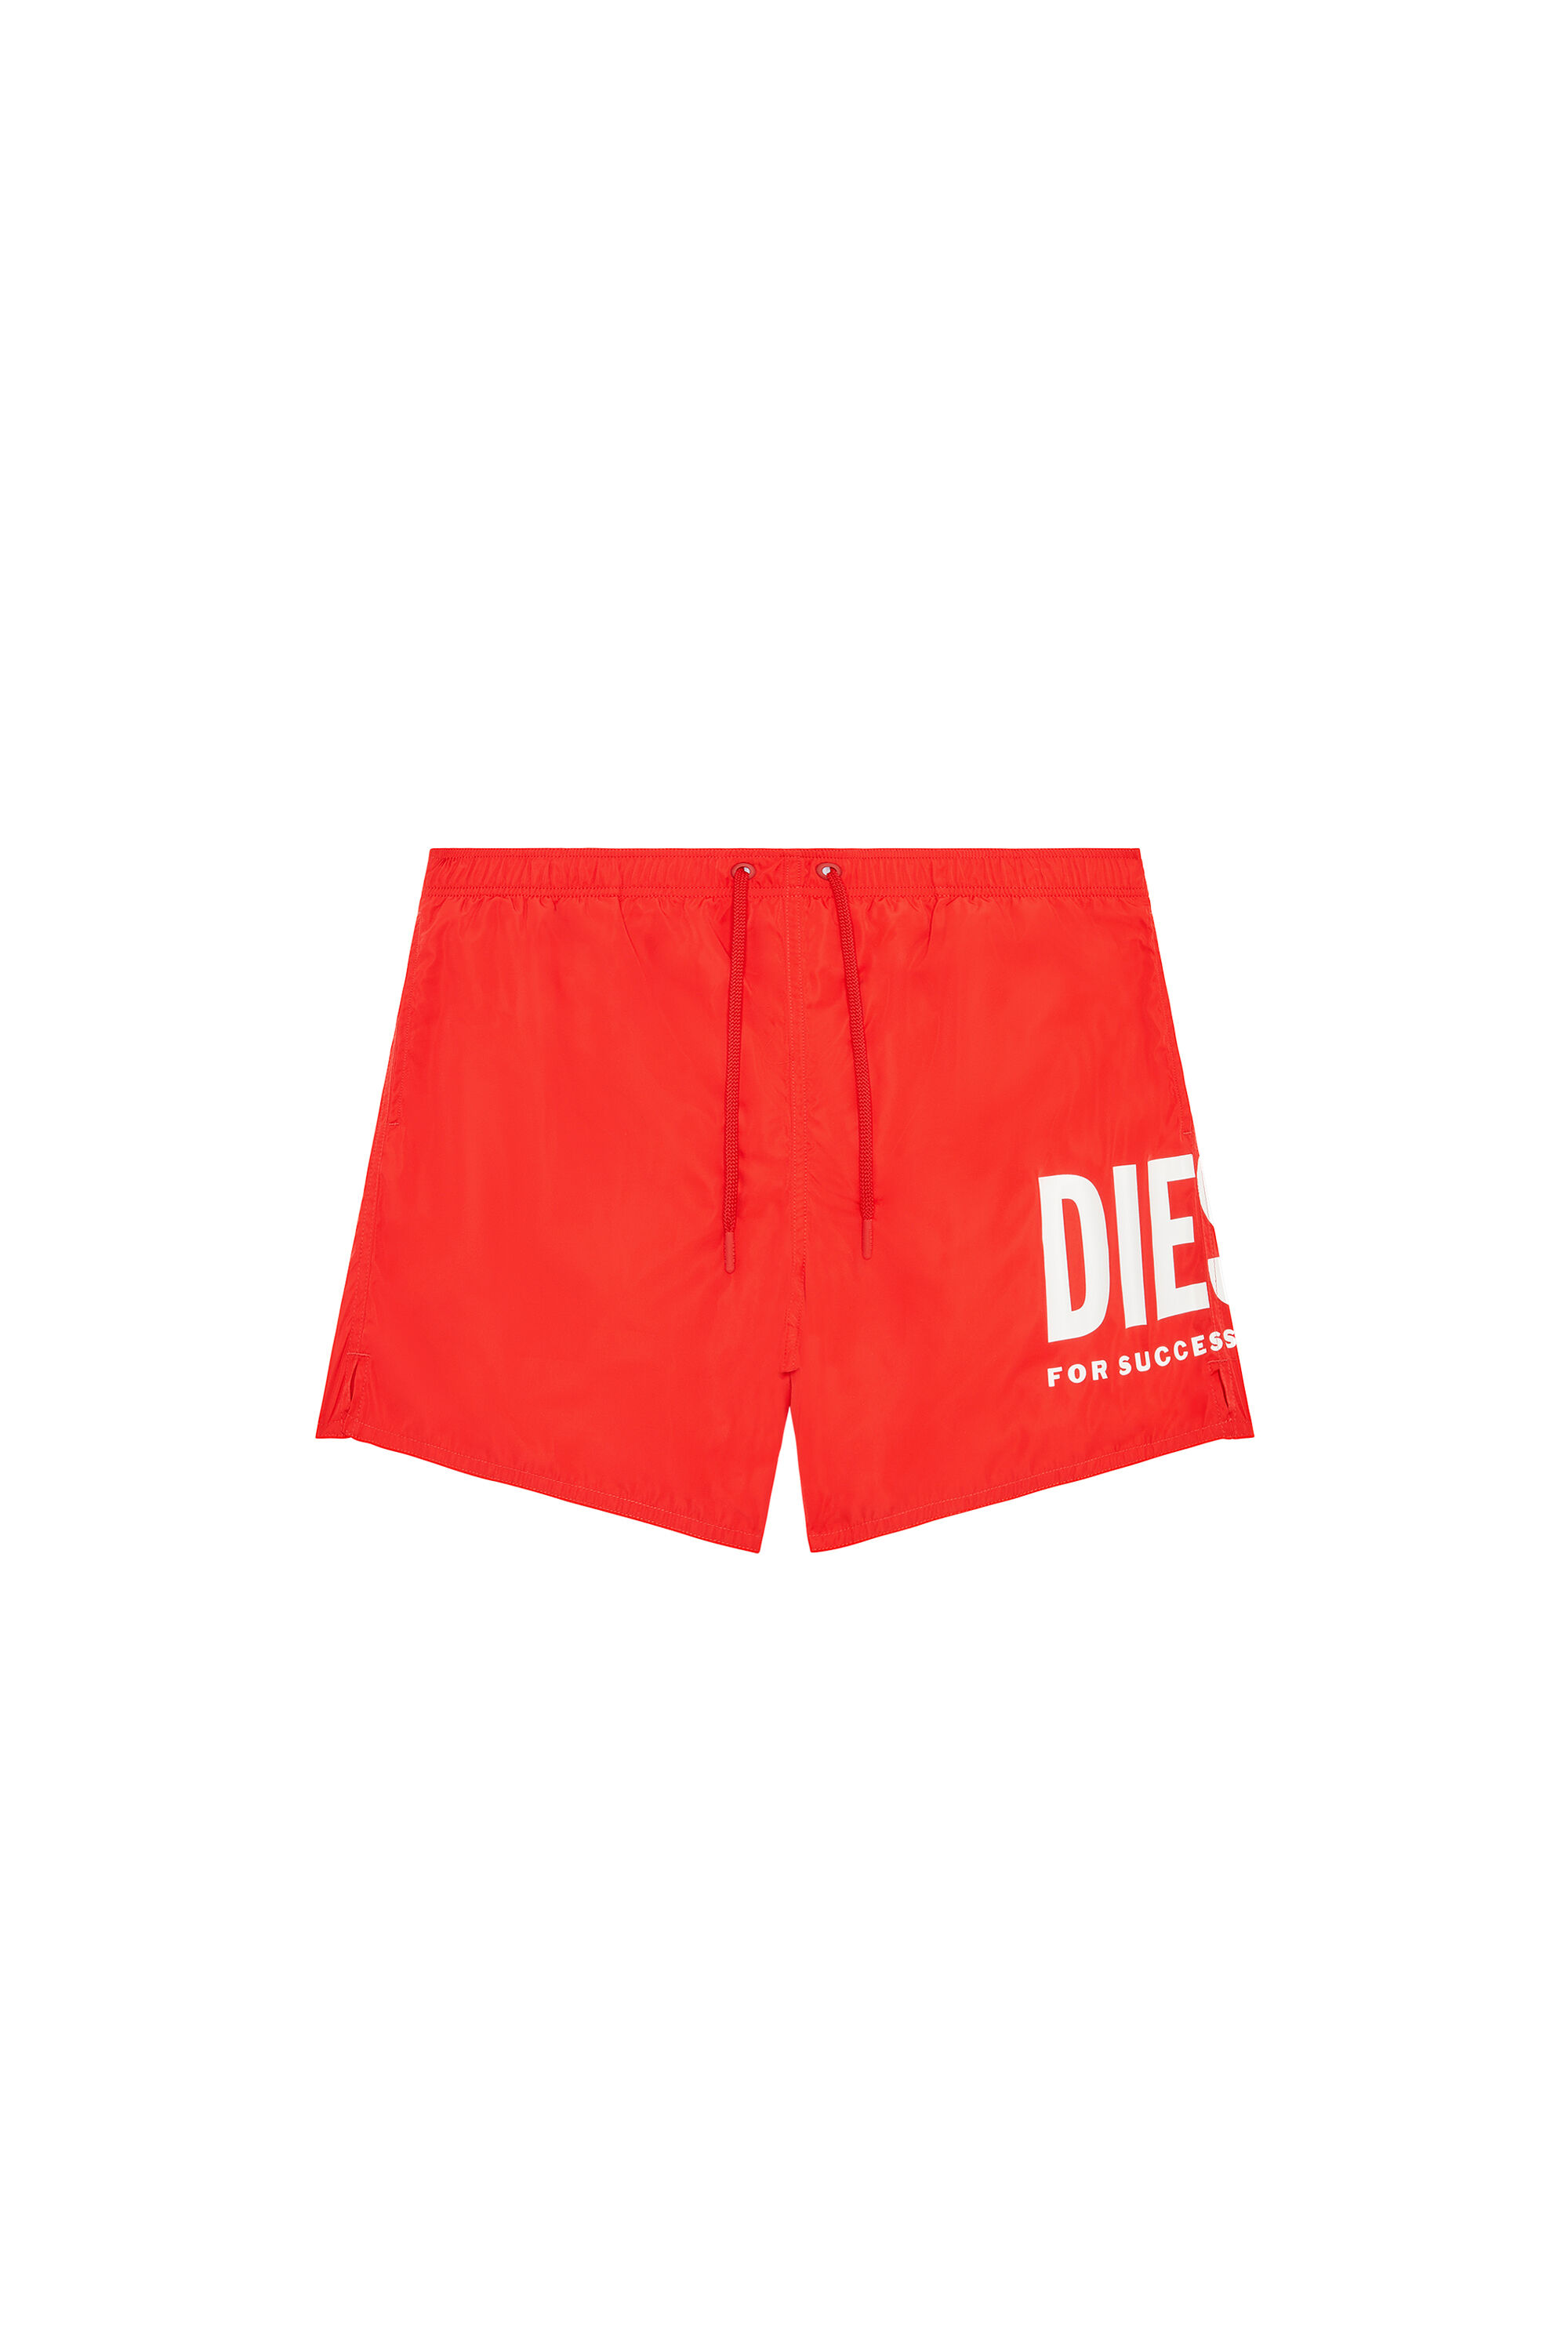 Diesel - BMBX-NICO, Herren Mittellange Bade-Shorts mit Maxi-Logo in Rot - Image 4